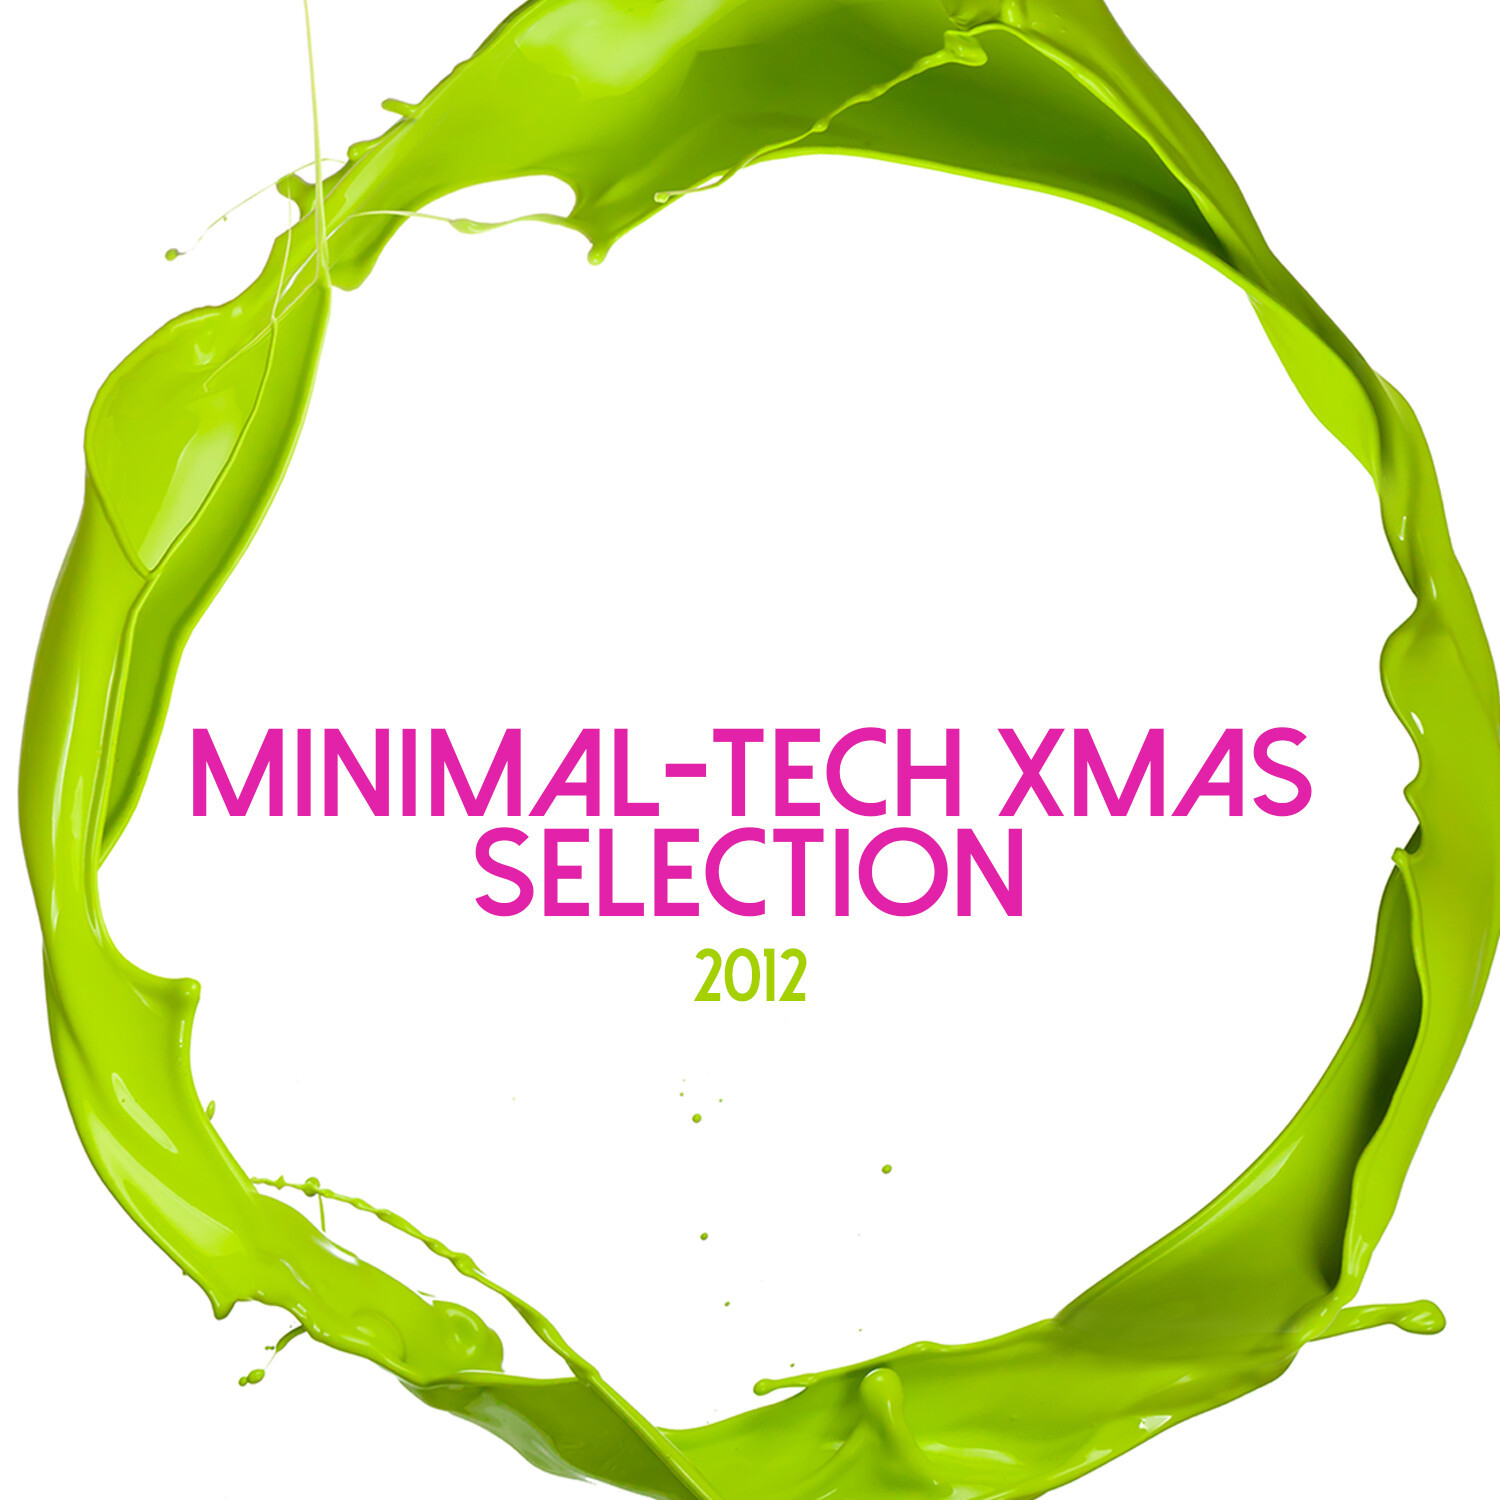 Minimal-Tech Xmas Selection 2012